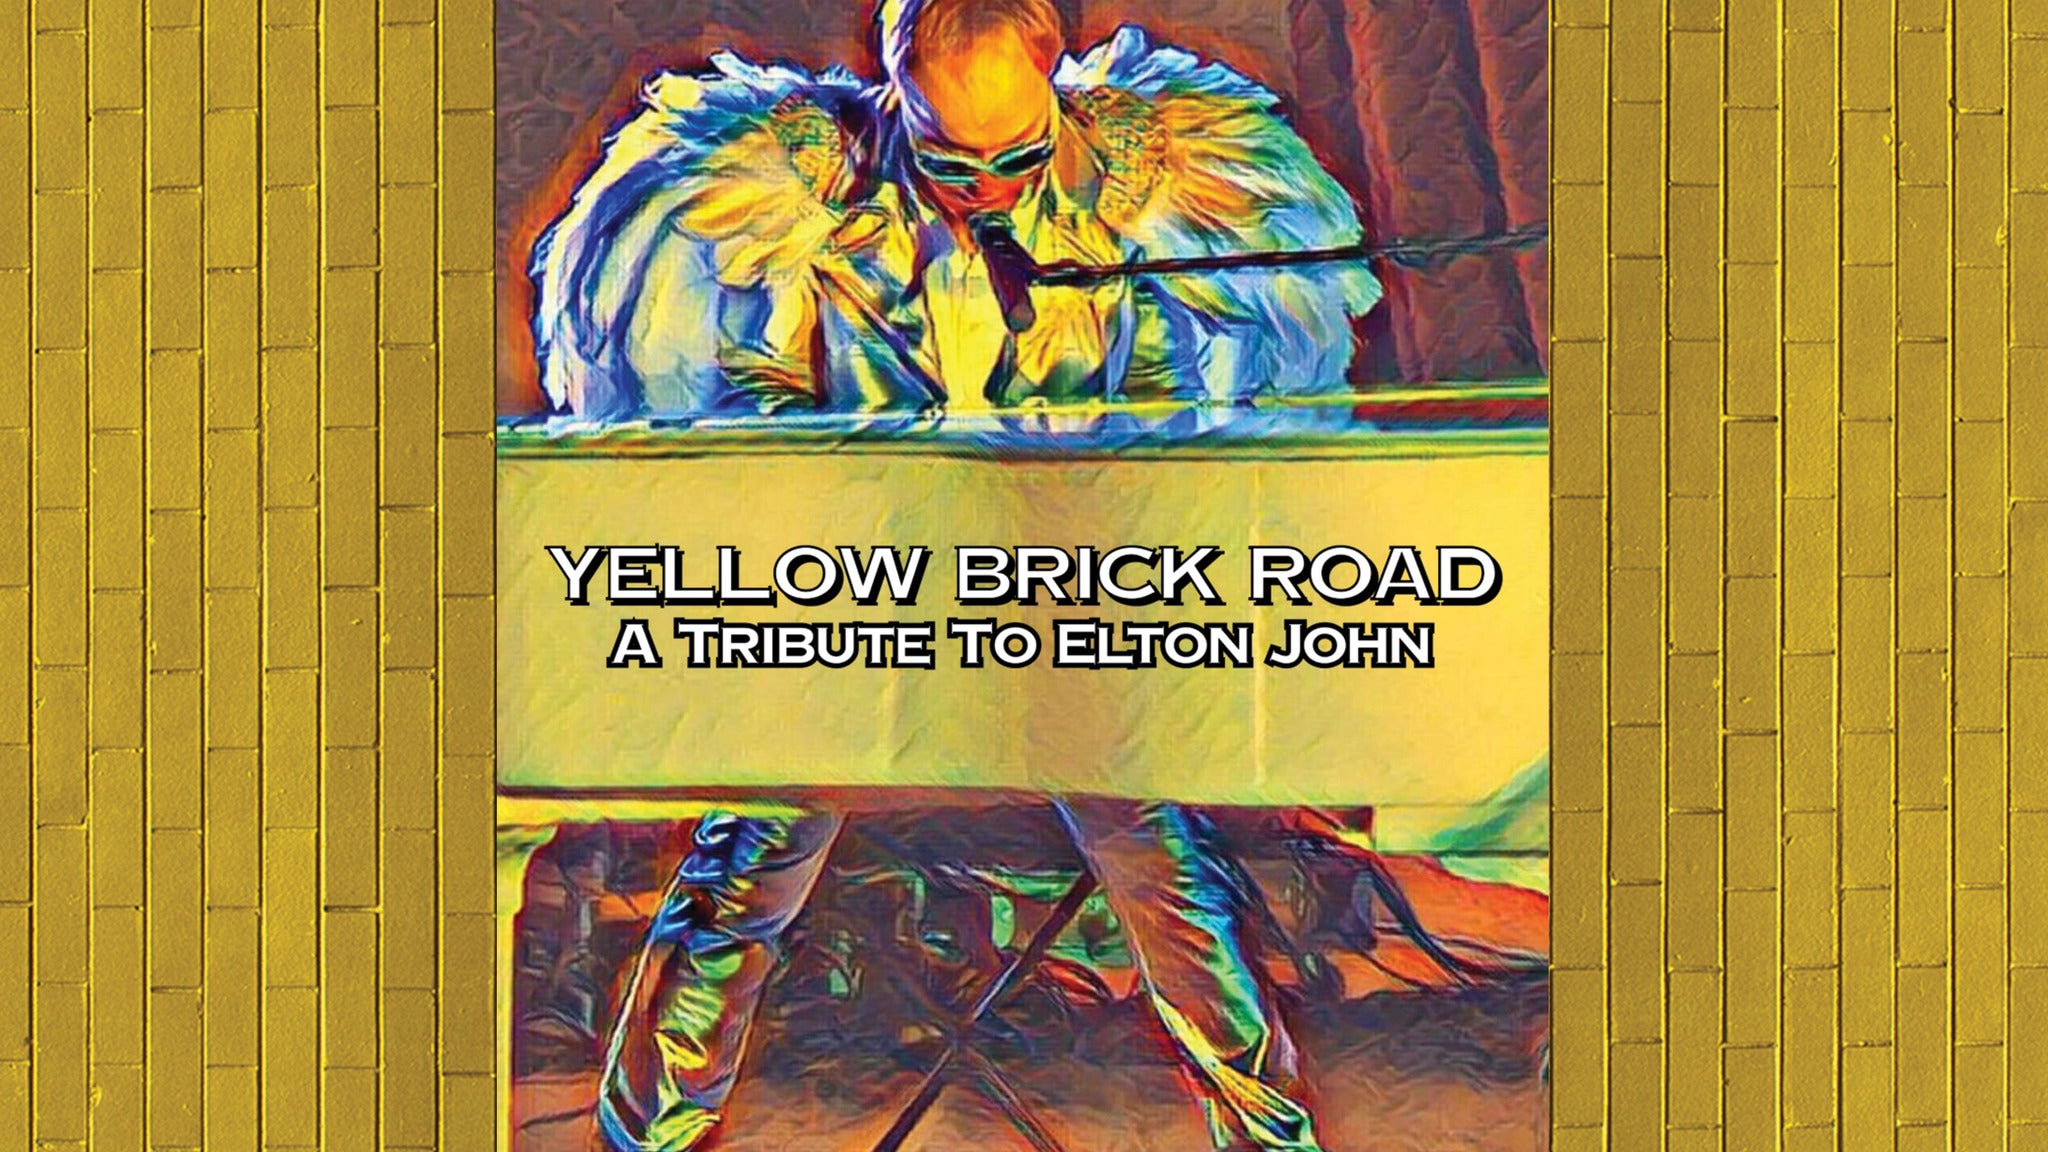 Yellow Brick Road, Elton John Tribute in Detroit promo photo for MCCH presale offer code